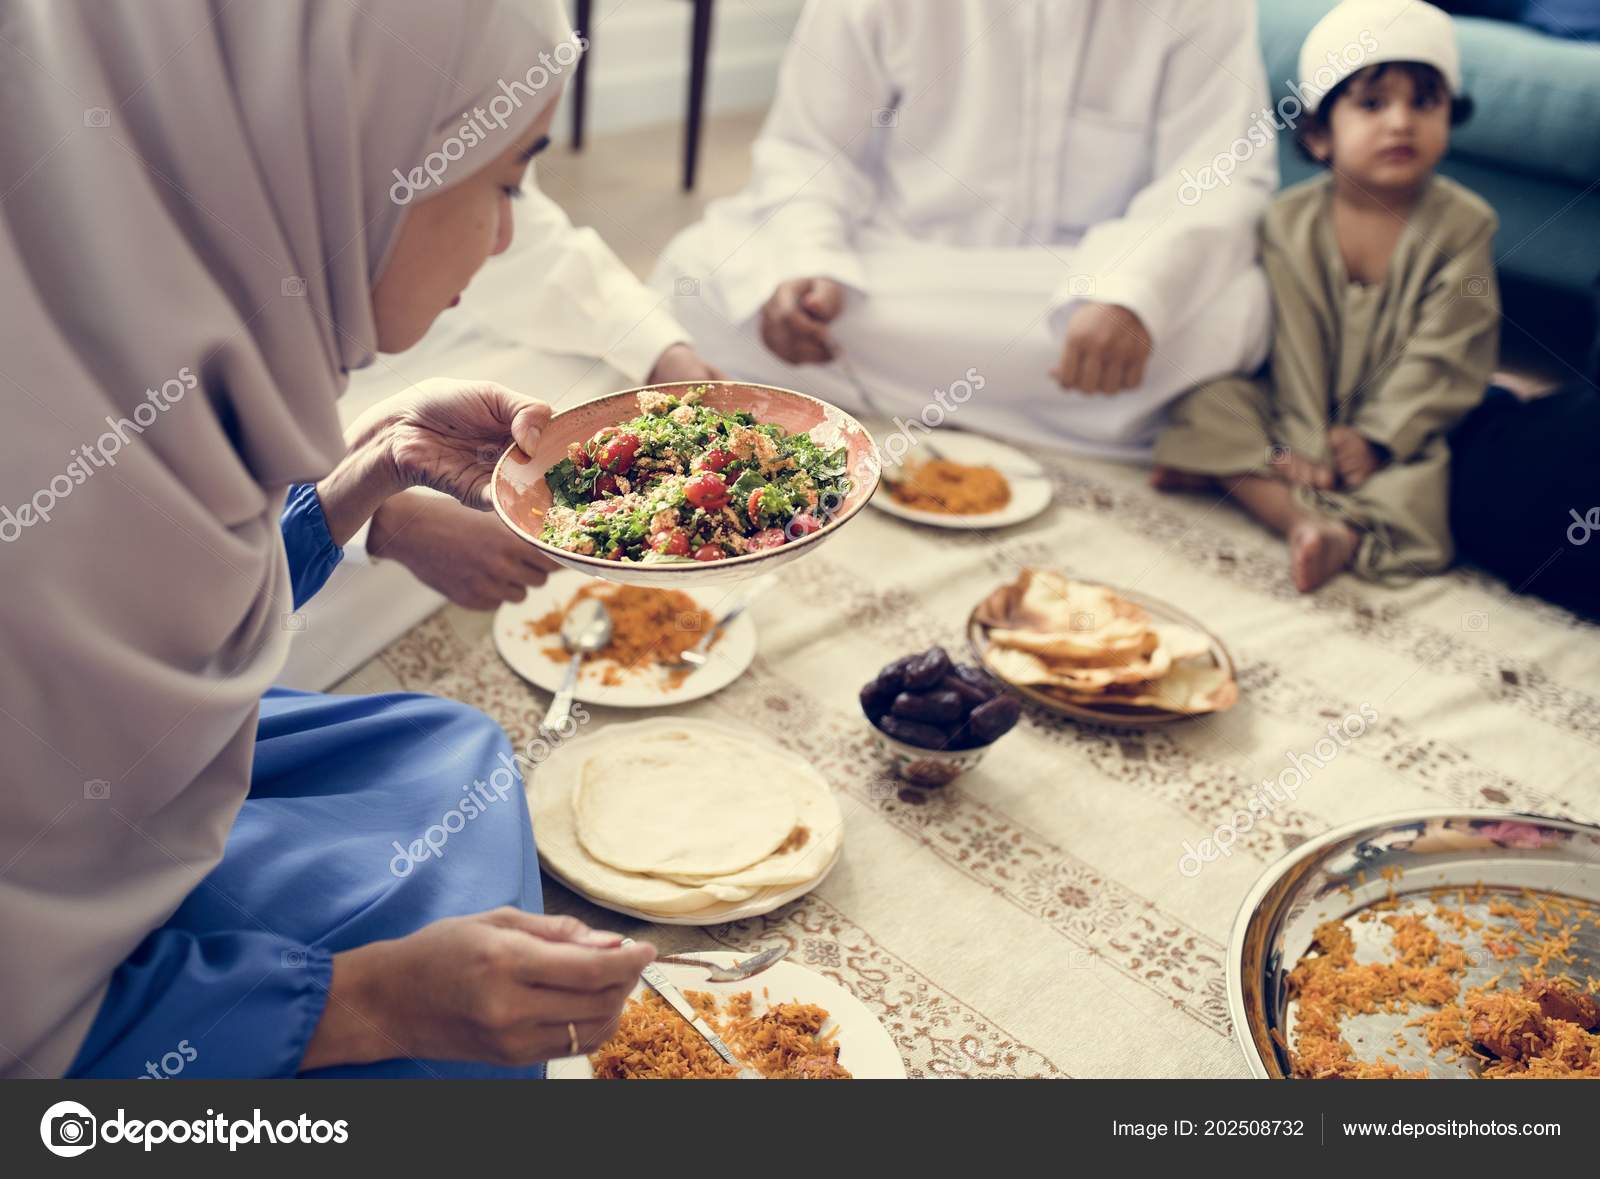 В рамадан едят мясо. Мусульманская семья за столом. Мусульмане за едой. Мусульмане за столом. Гостеприимство мусульман.